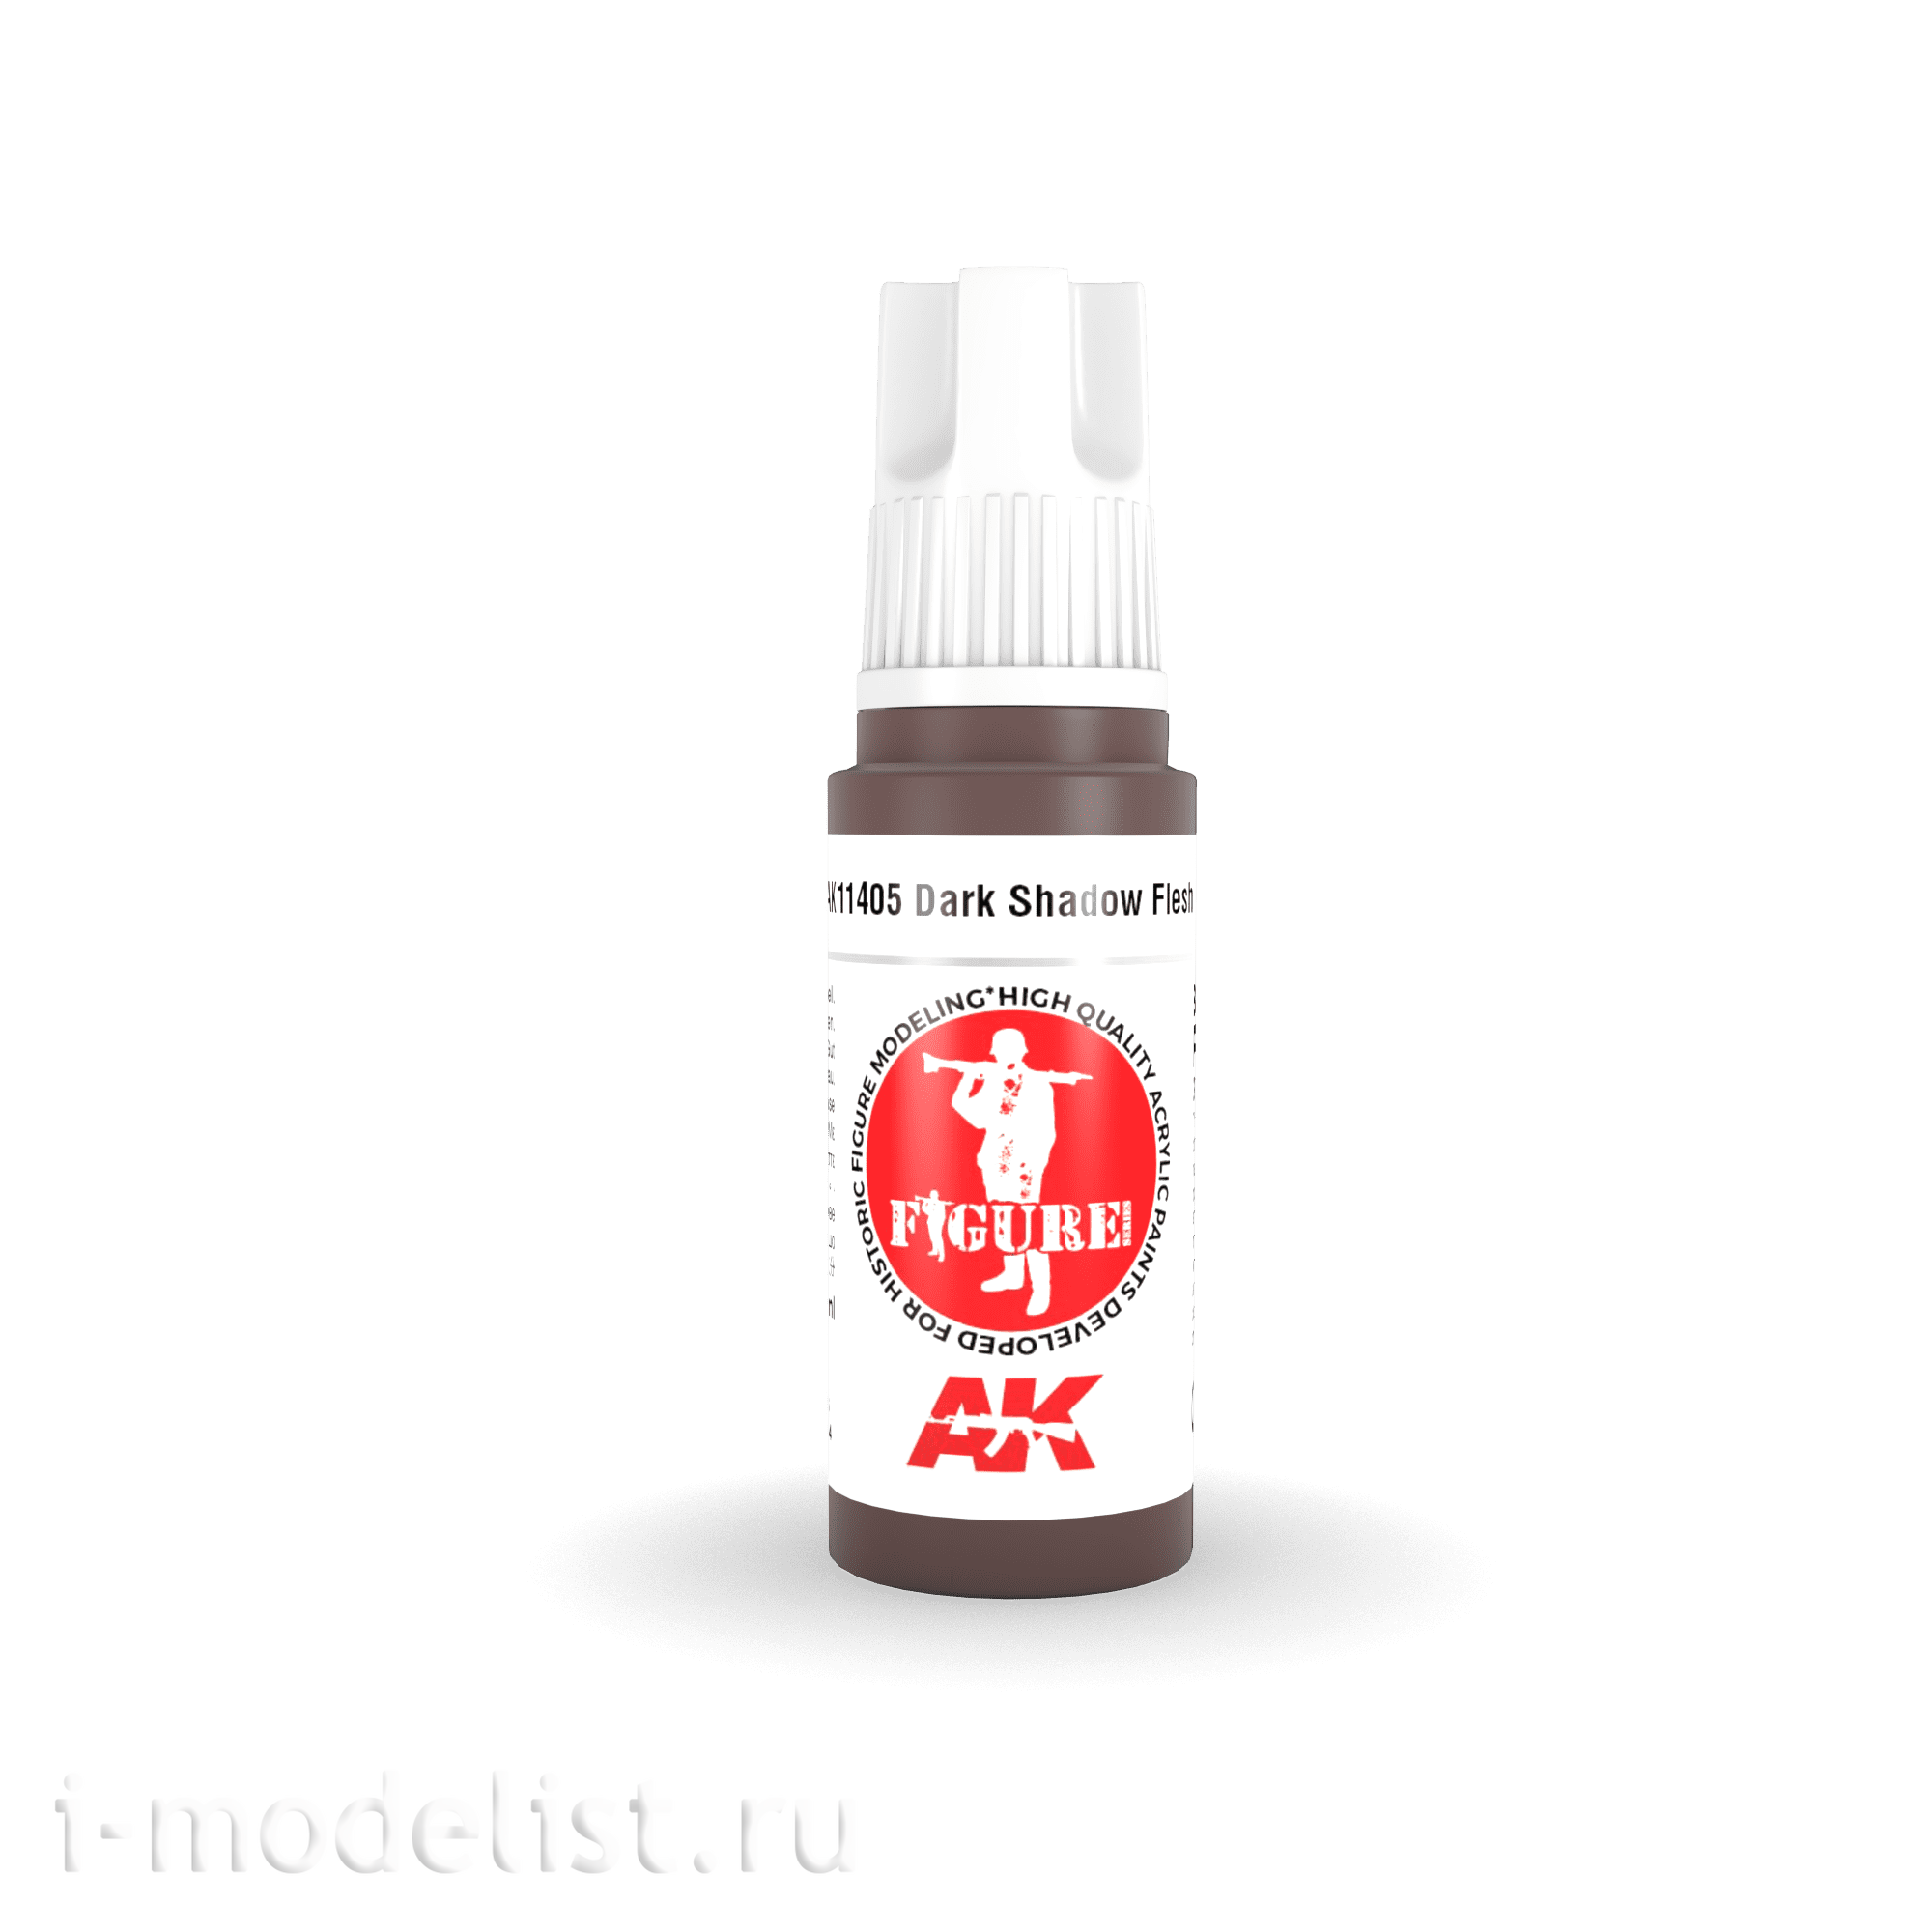 AK11405 AK Interactive Acrylic paint DARK SHADOW FLESH-FIGURES 17 ml